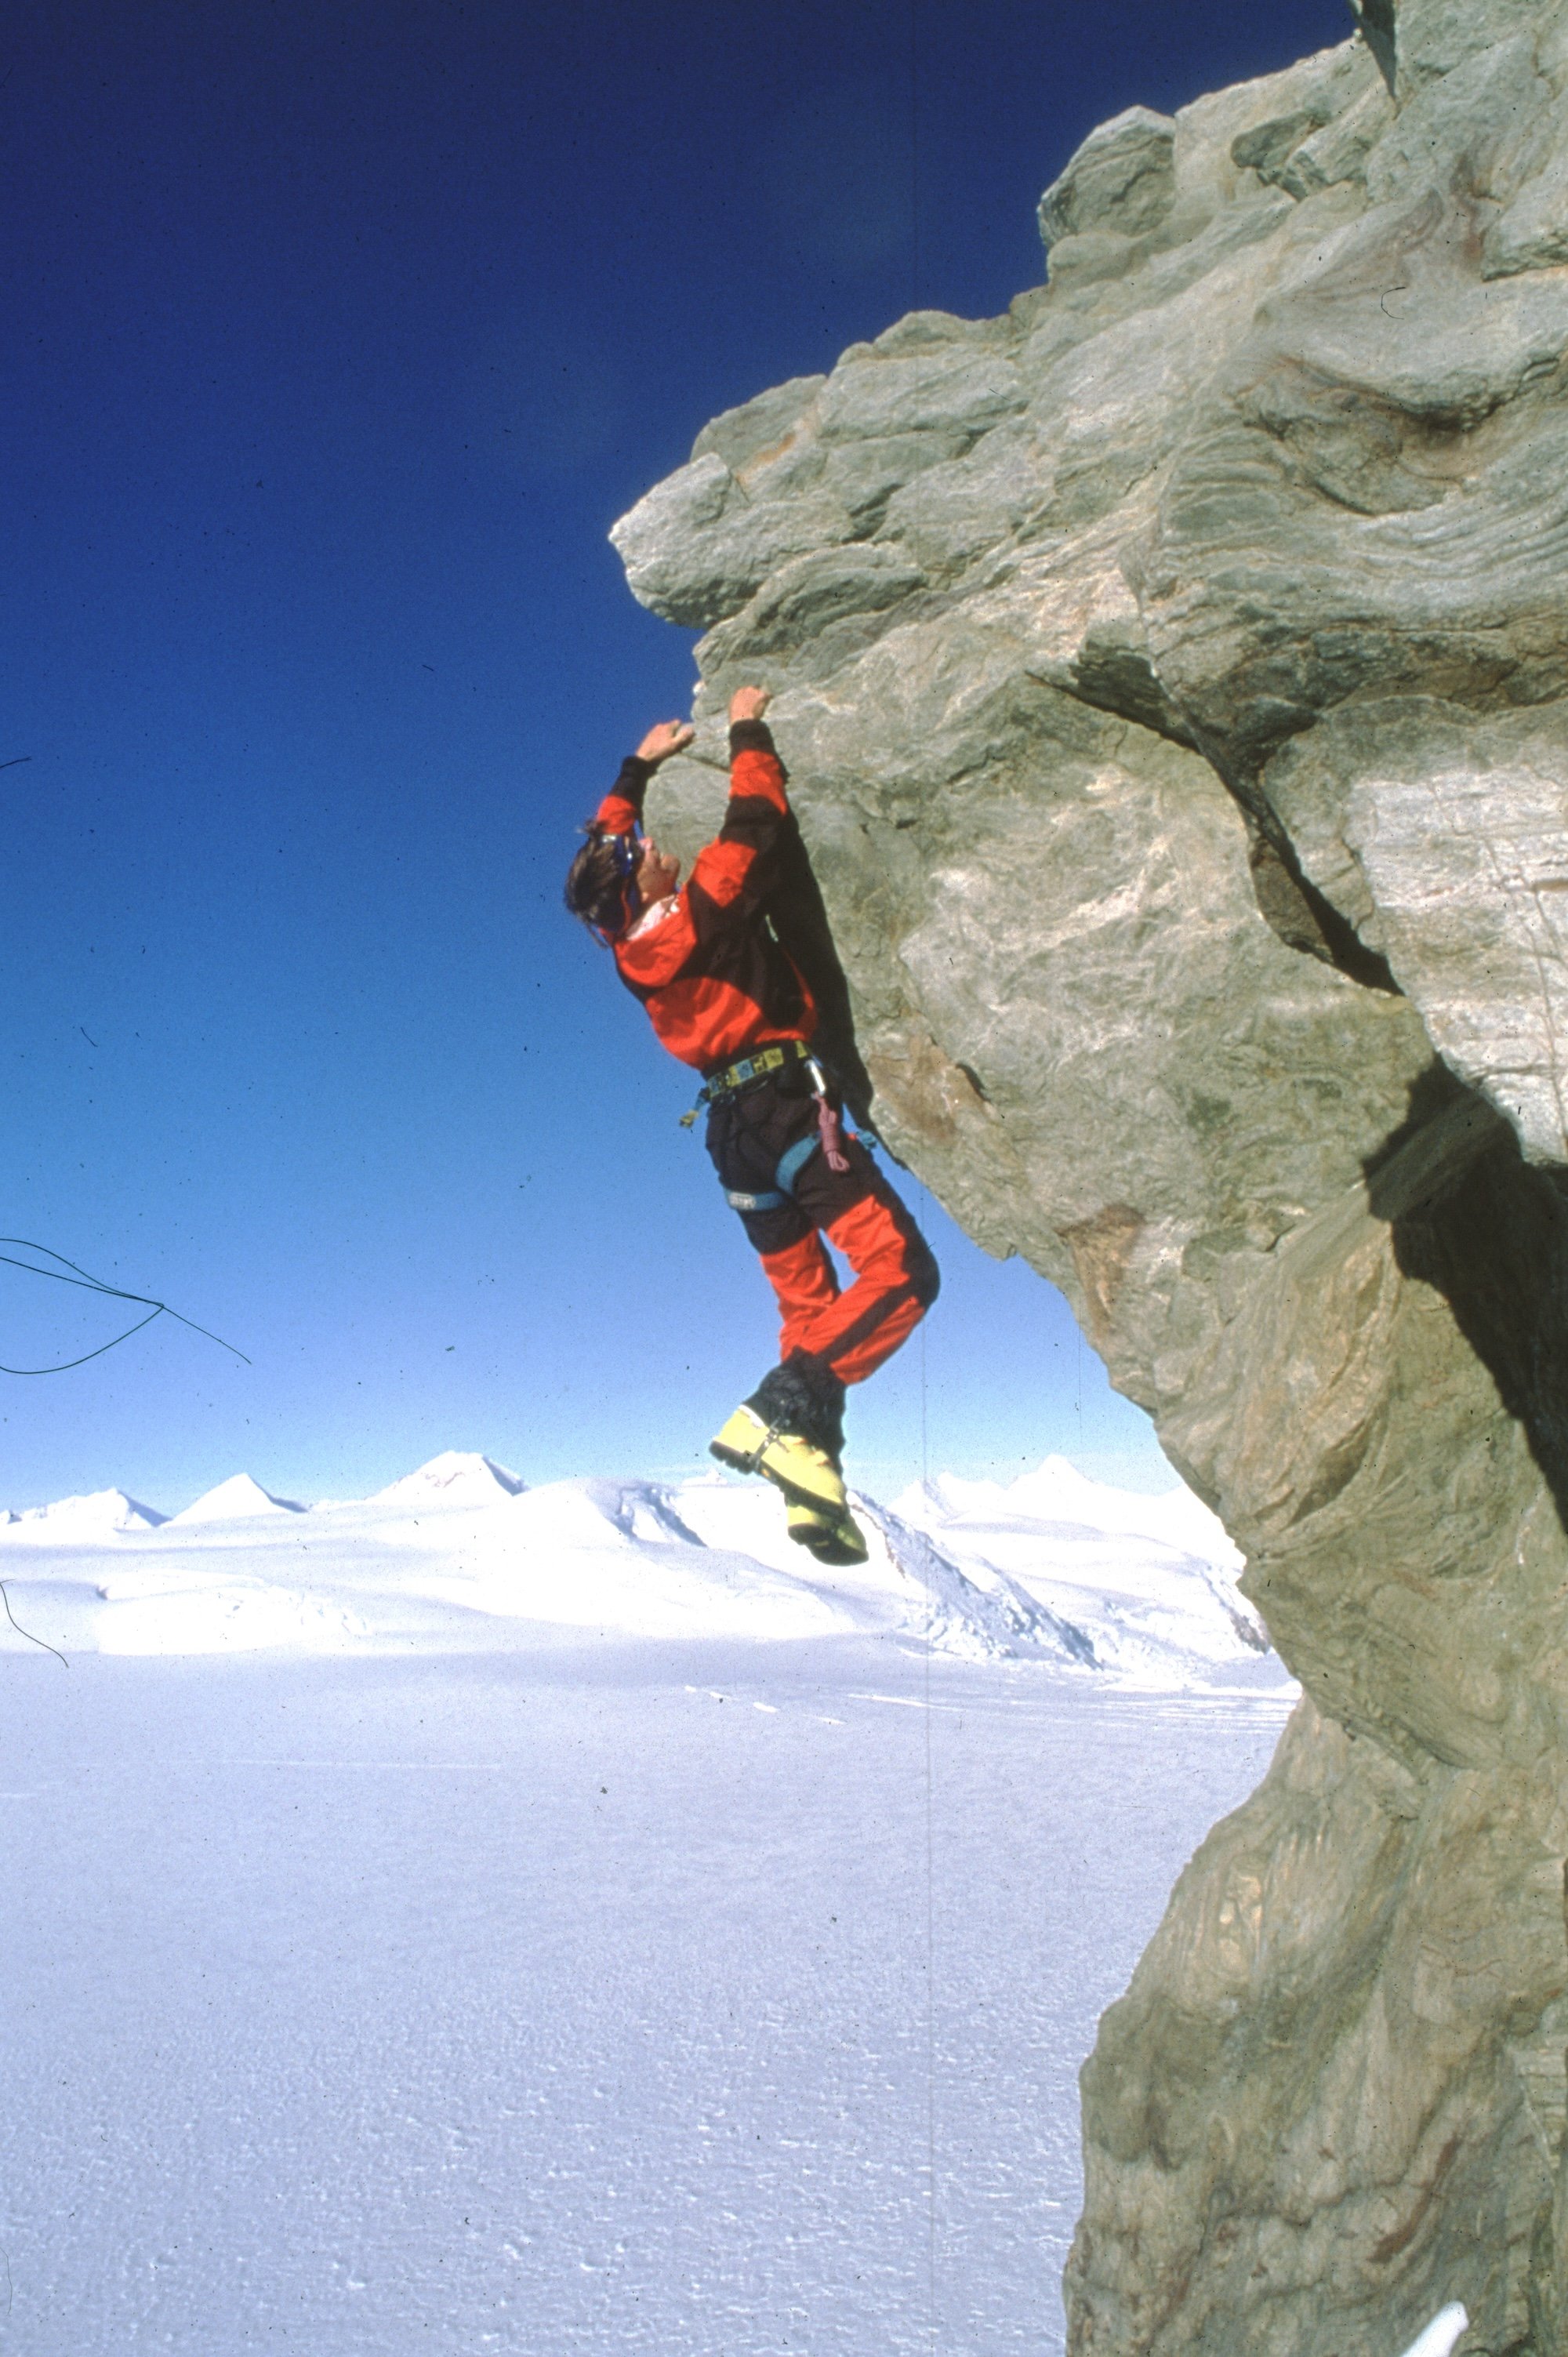  Alex Lowe hangs from a cliff edge on the summit of a peak over Patton Glacier, Ellsworth Mountains, Antarctica 1998. C: Gordon Wiltsie 